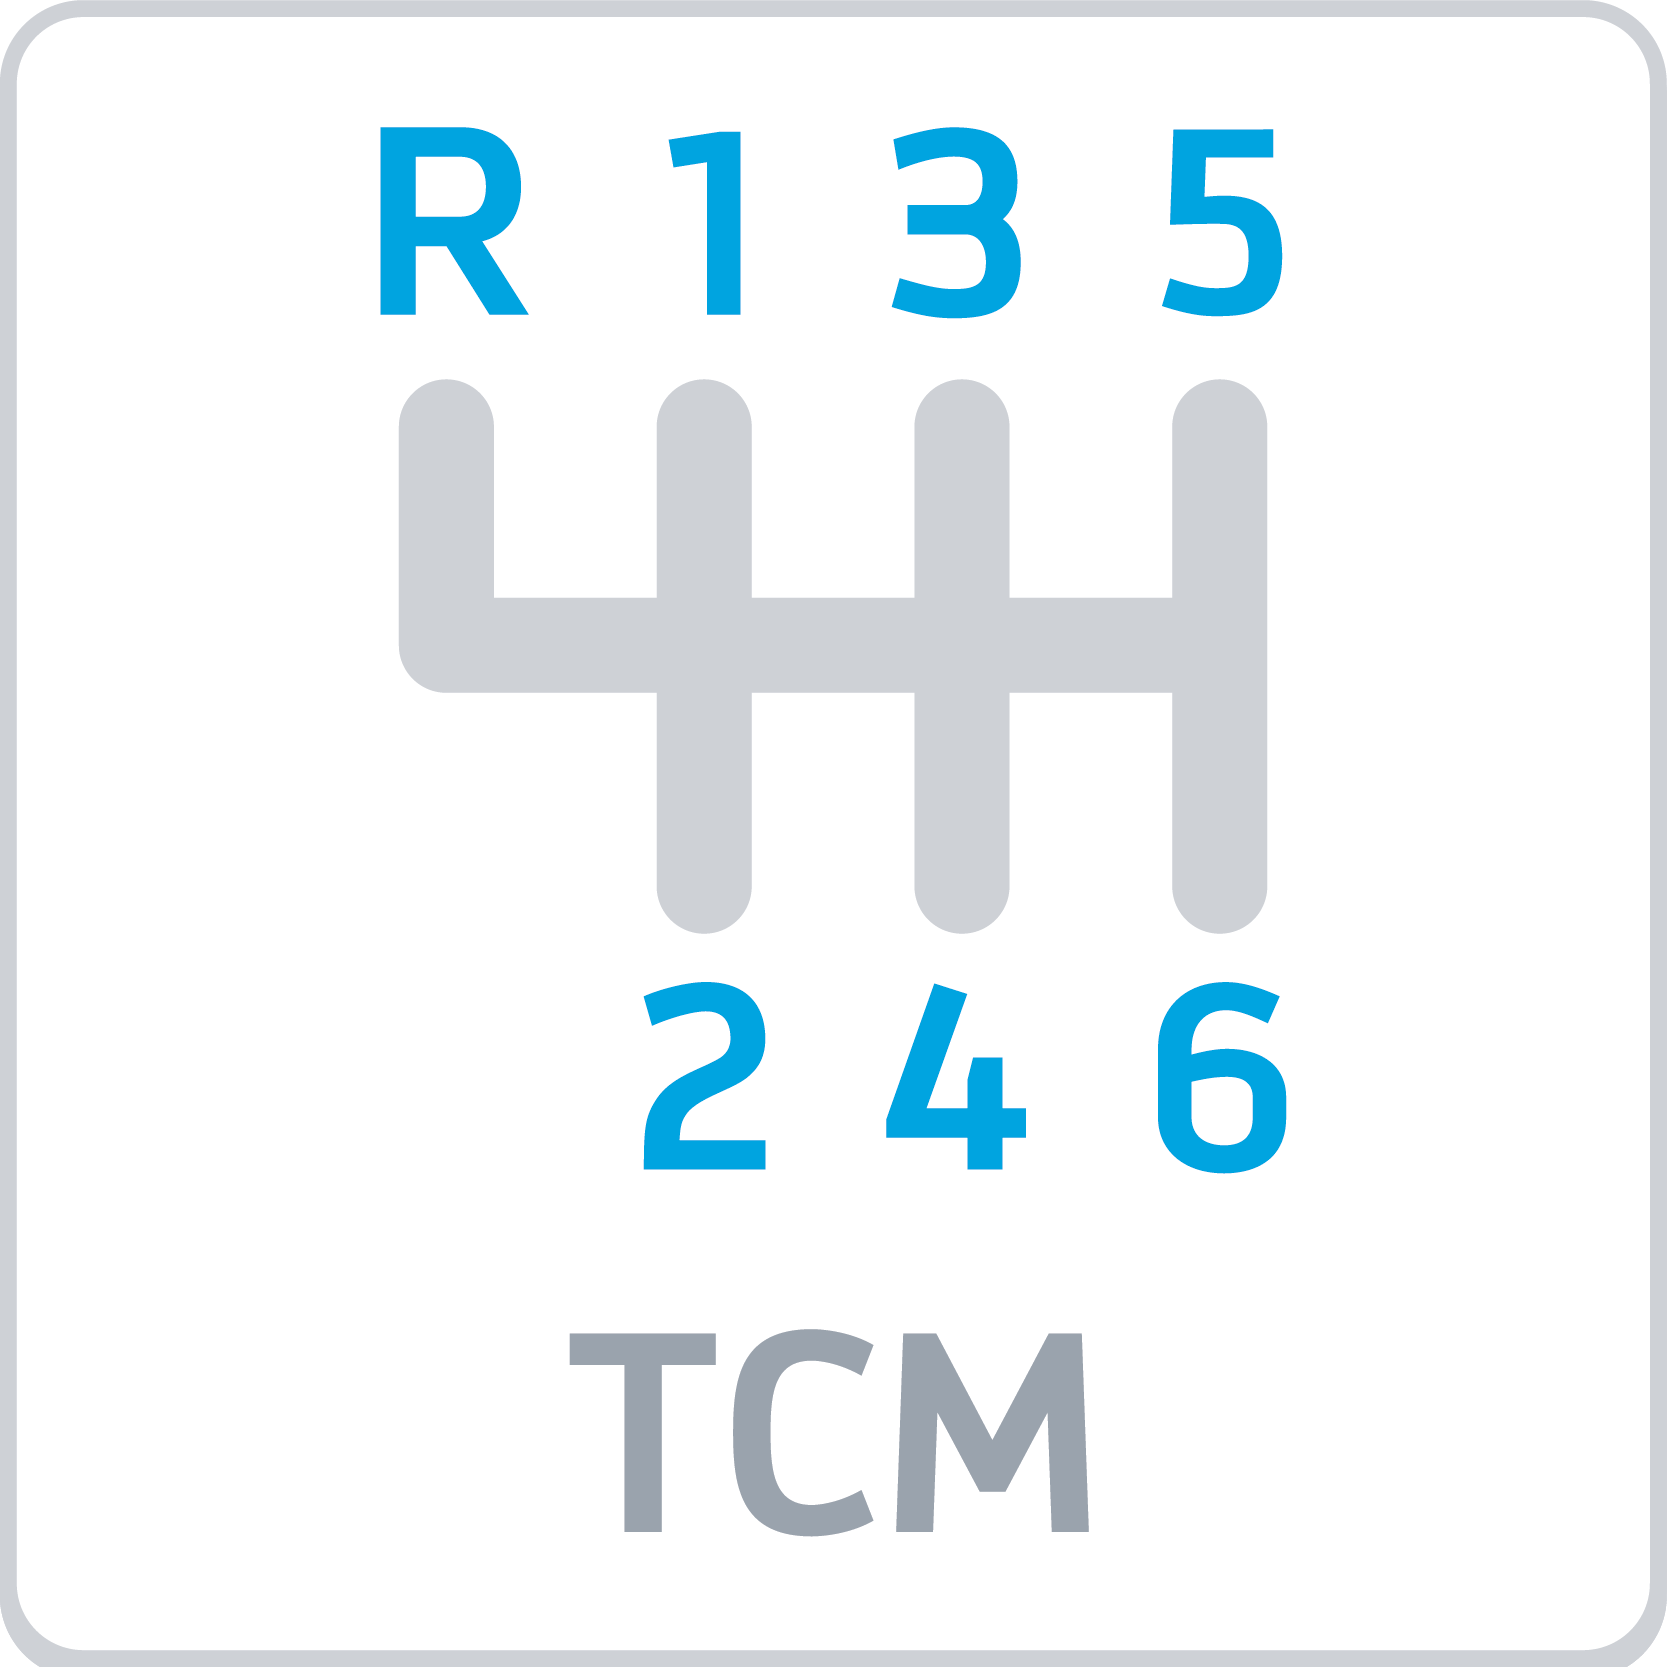 Kia Transmission Control Module (TCM)